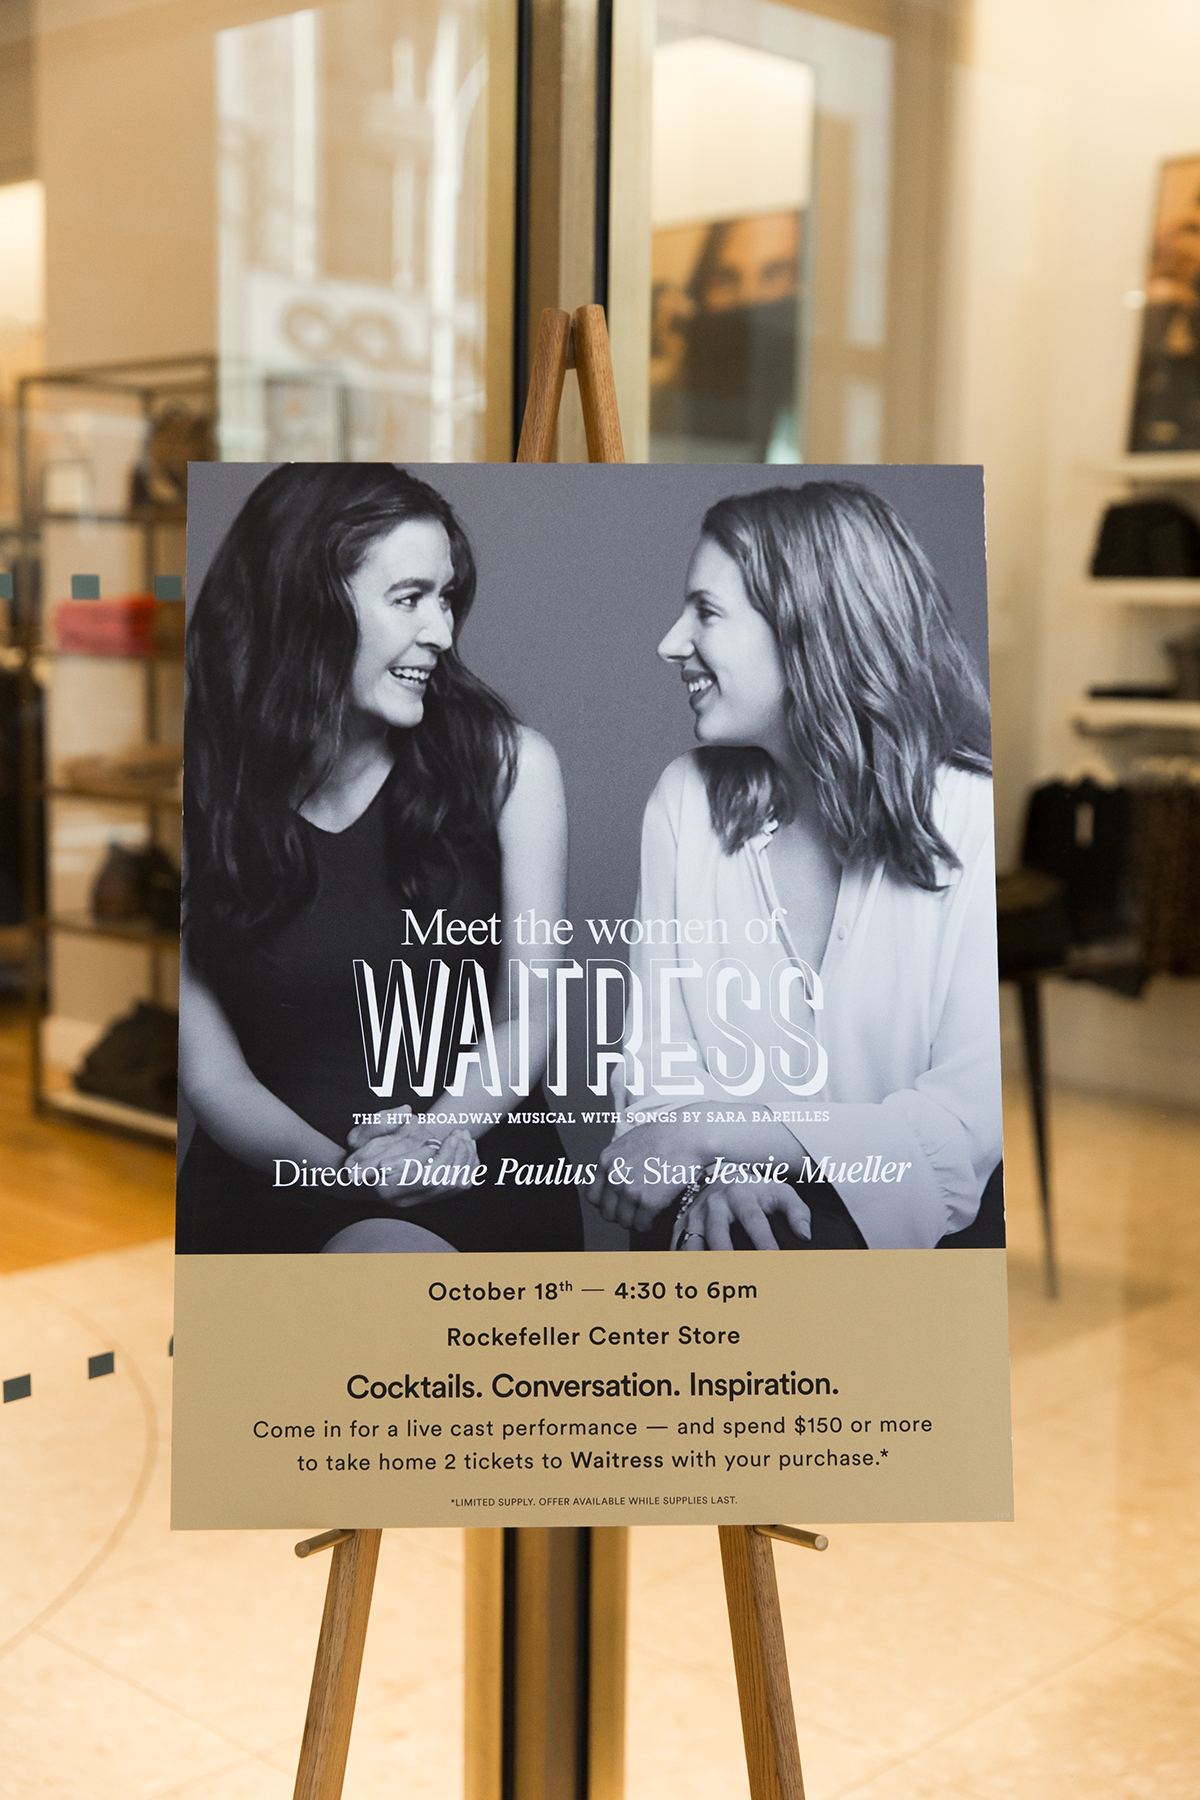 Retail Fashion  apparel waitress broadway women inspiration inspiring campaign